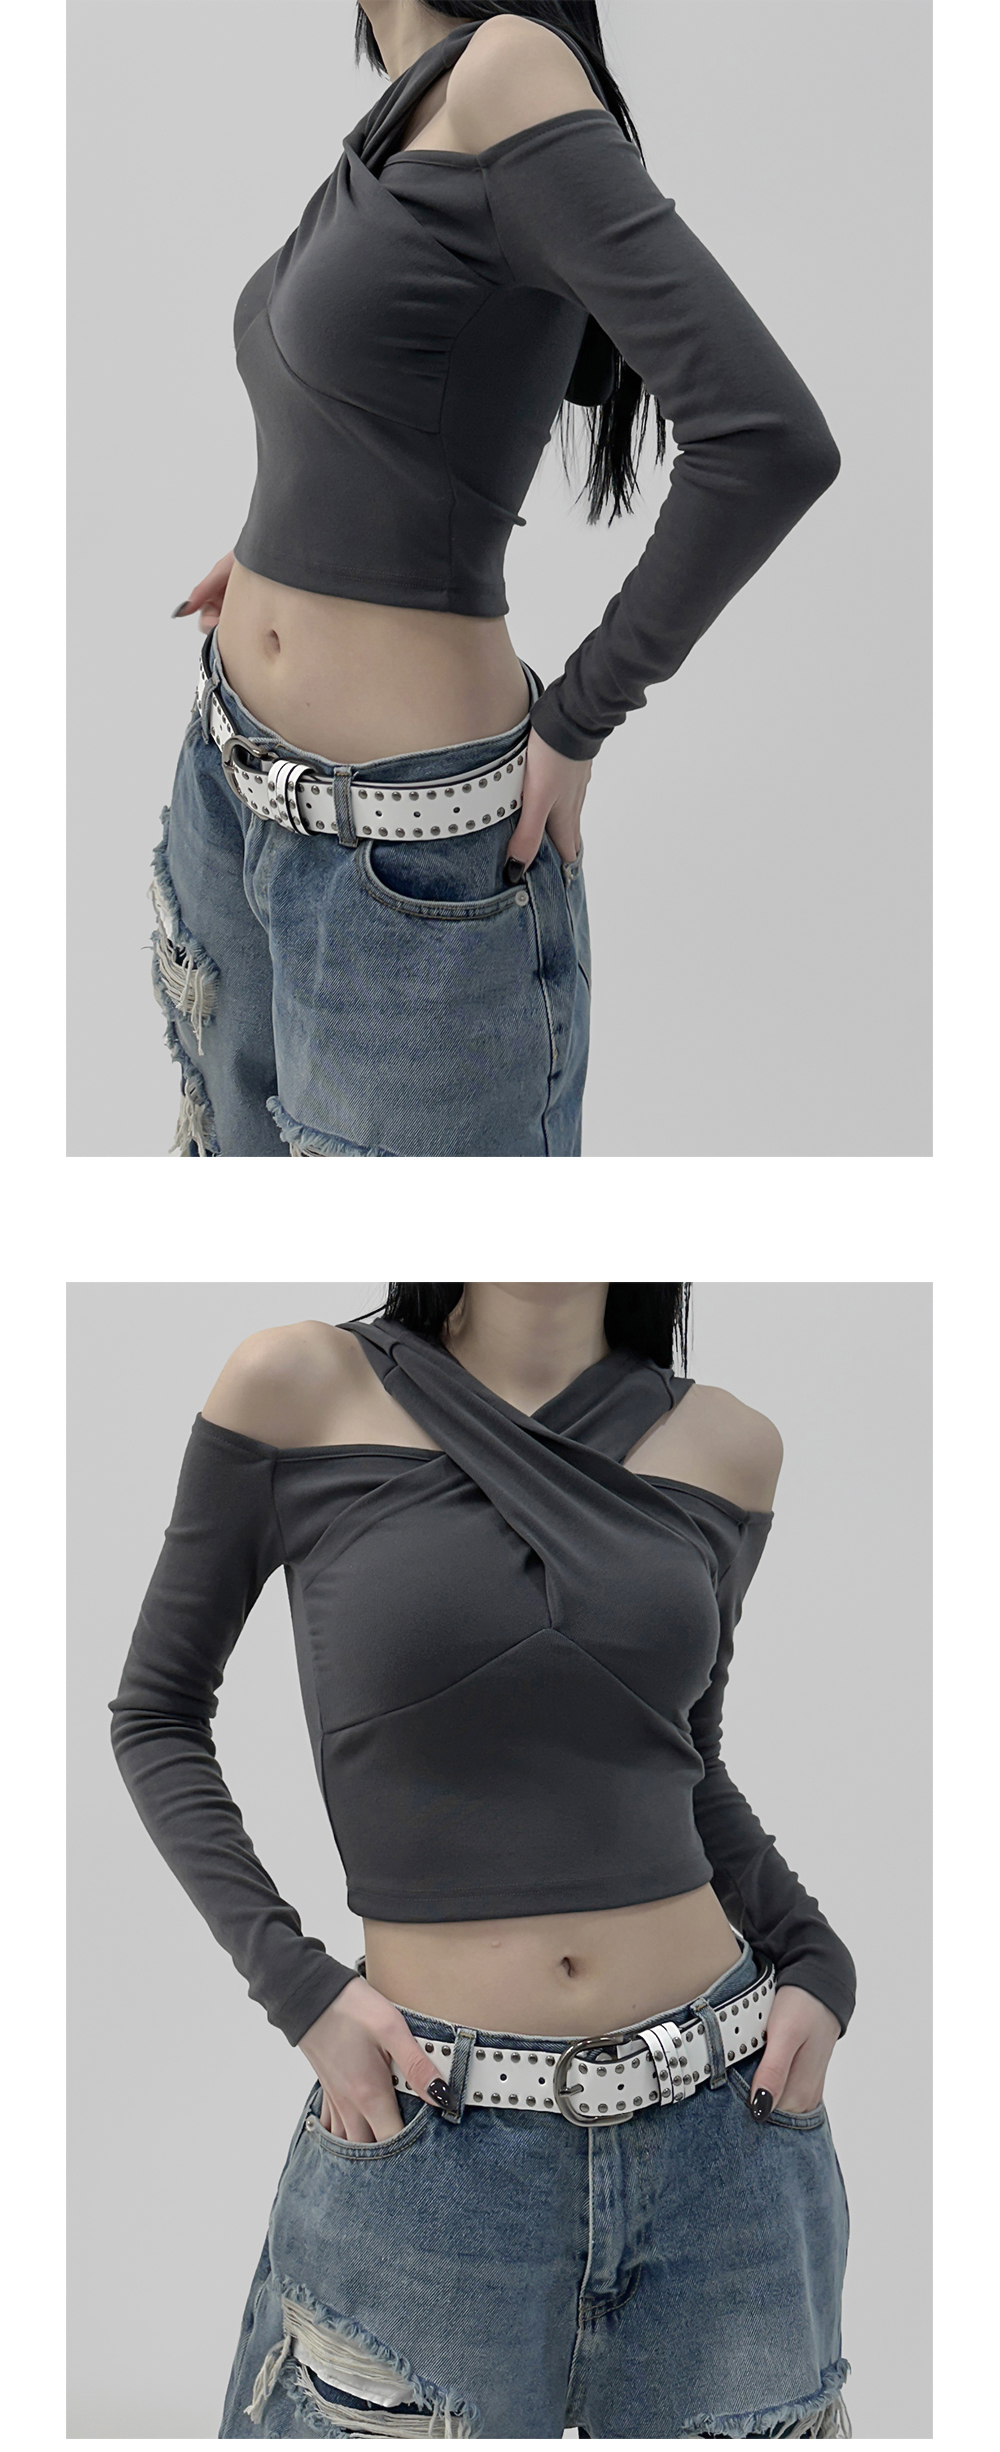 suspenders skirt/pants model image-S1L16